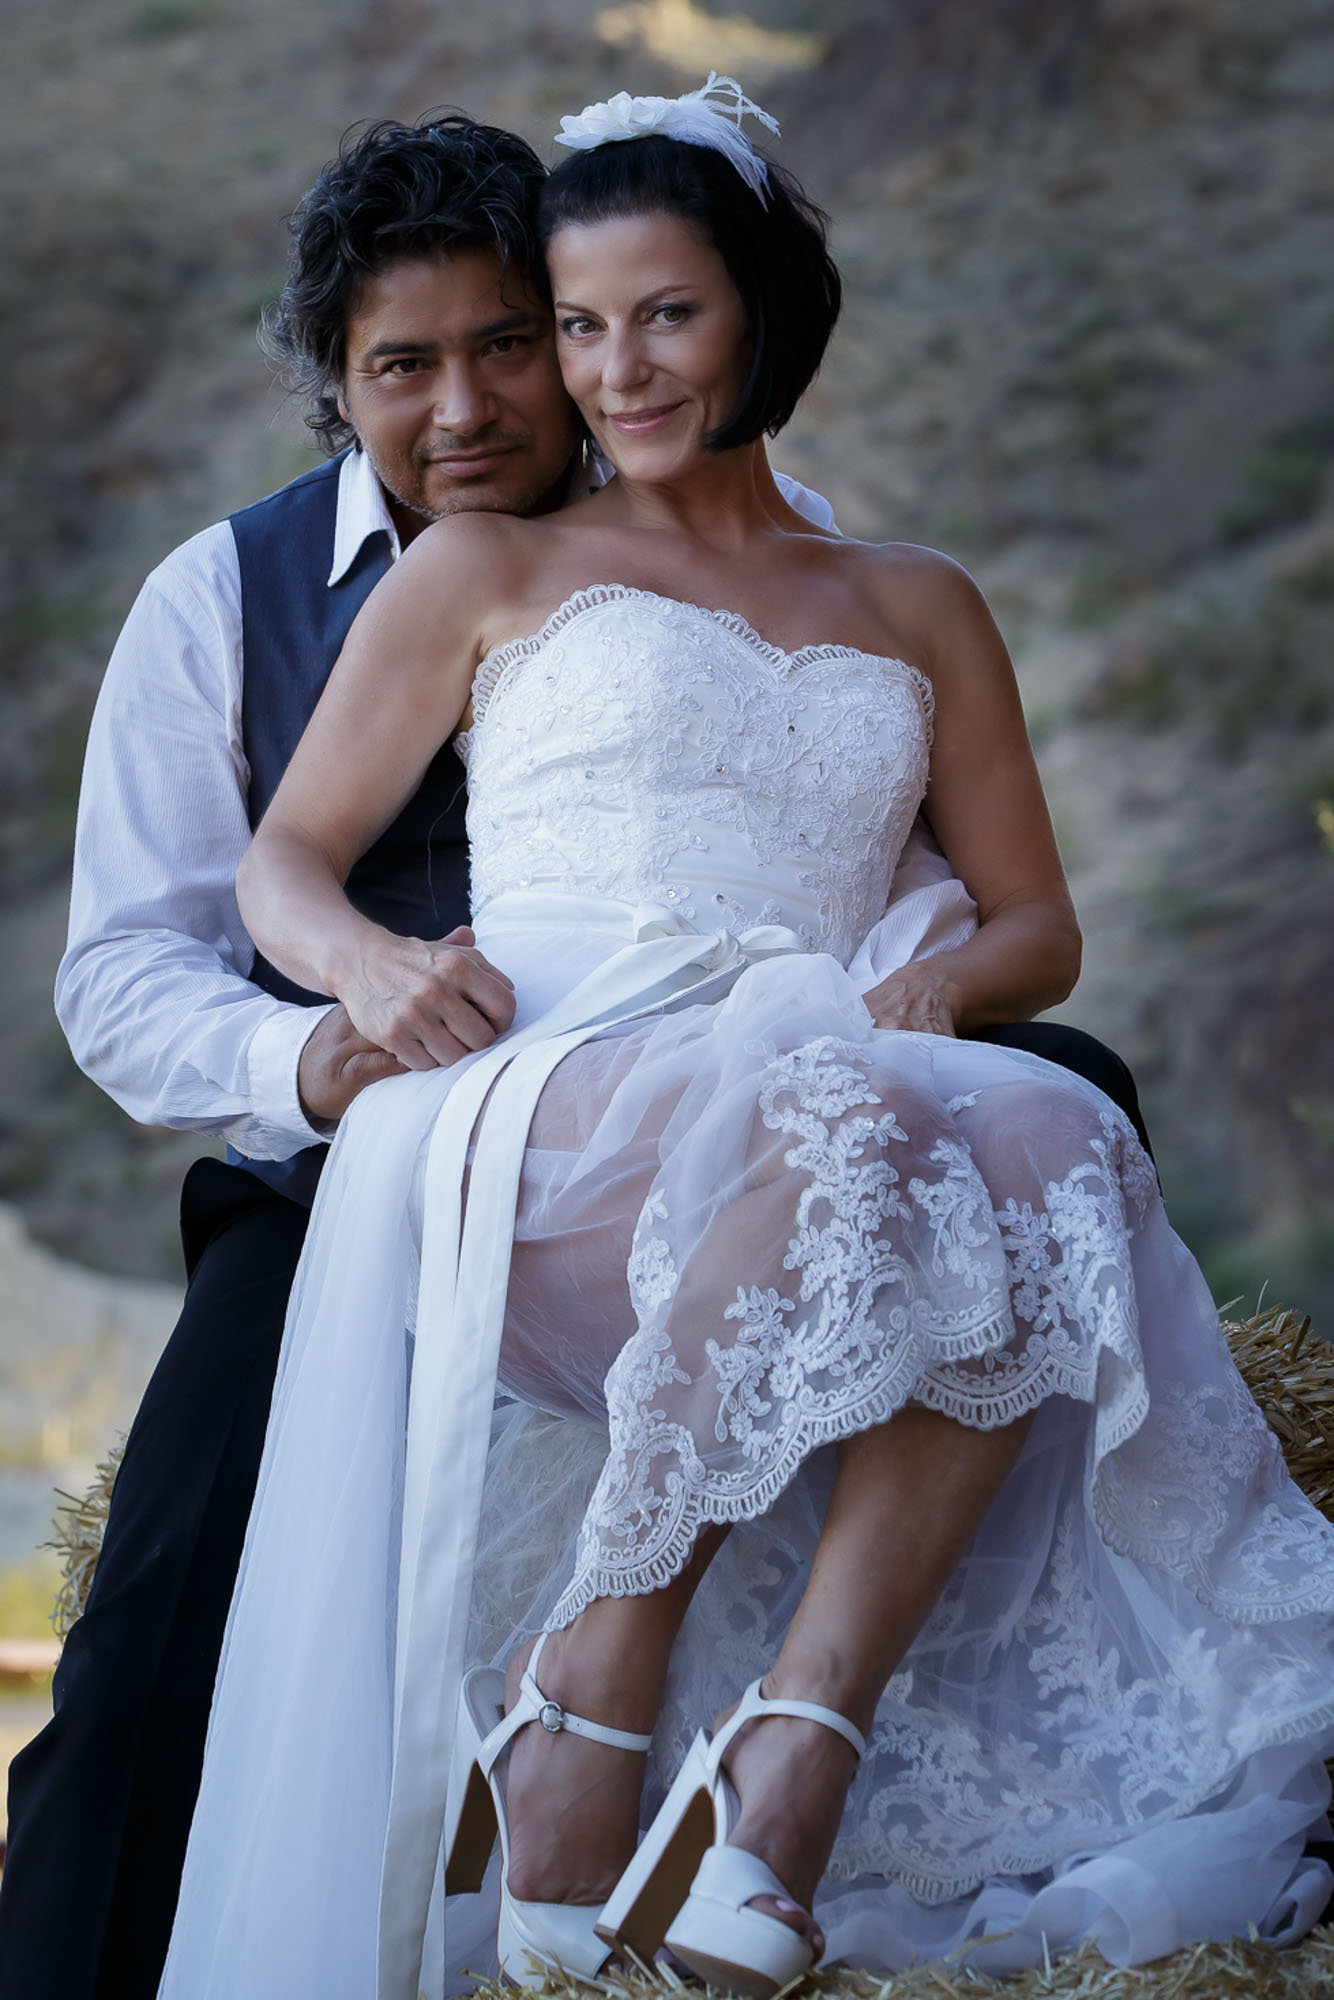 Desert wedding photos | Nelson Ghost Town weddings | Agi and Manuel